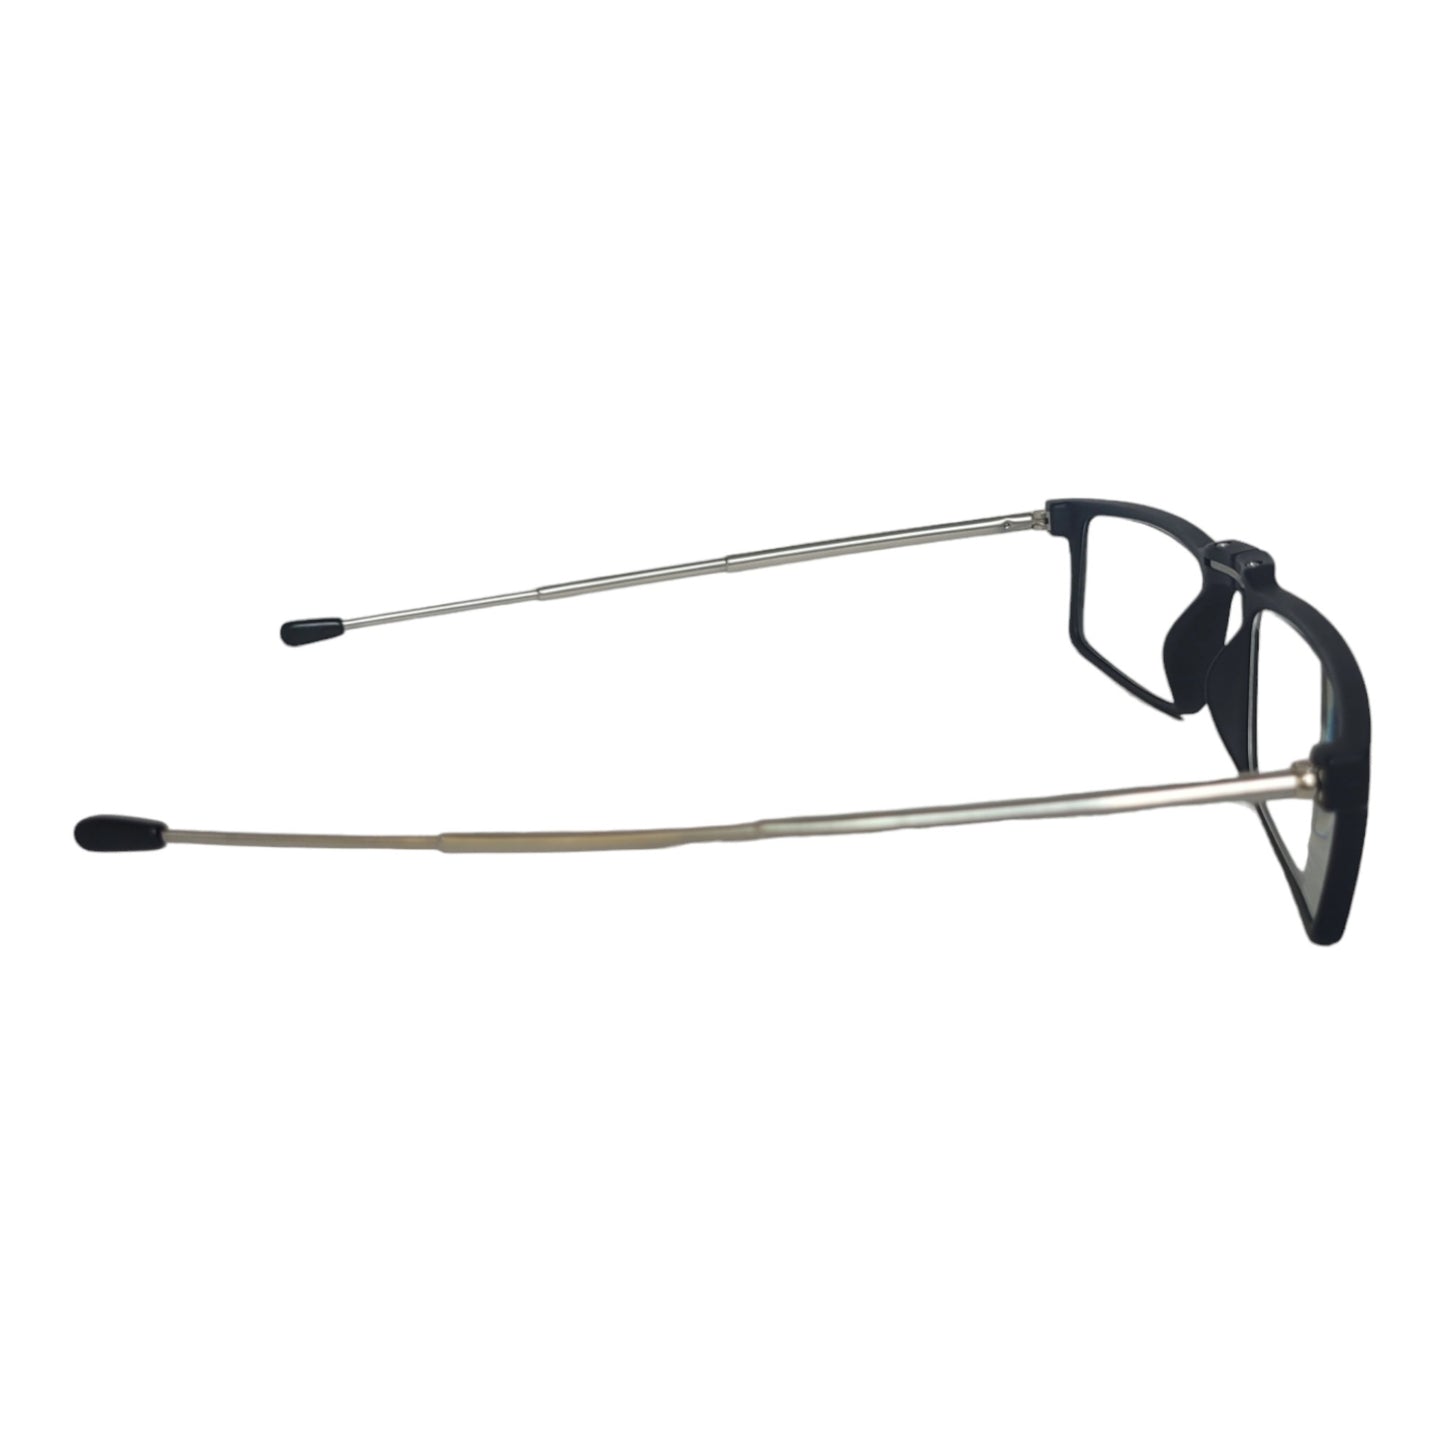 Affaires Foldable Reading Glasses for Men & Women | Light Weight-Folding reading glasses | Compact Portable Rectangle Eyewear Case